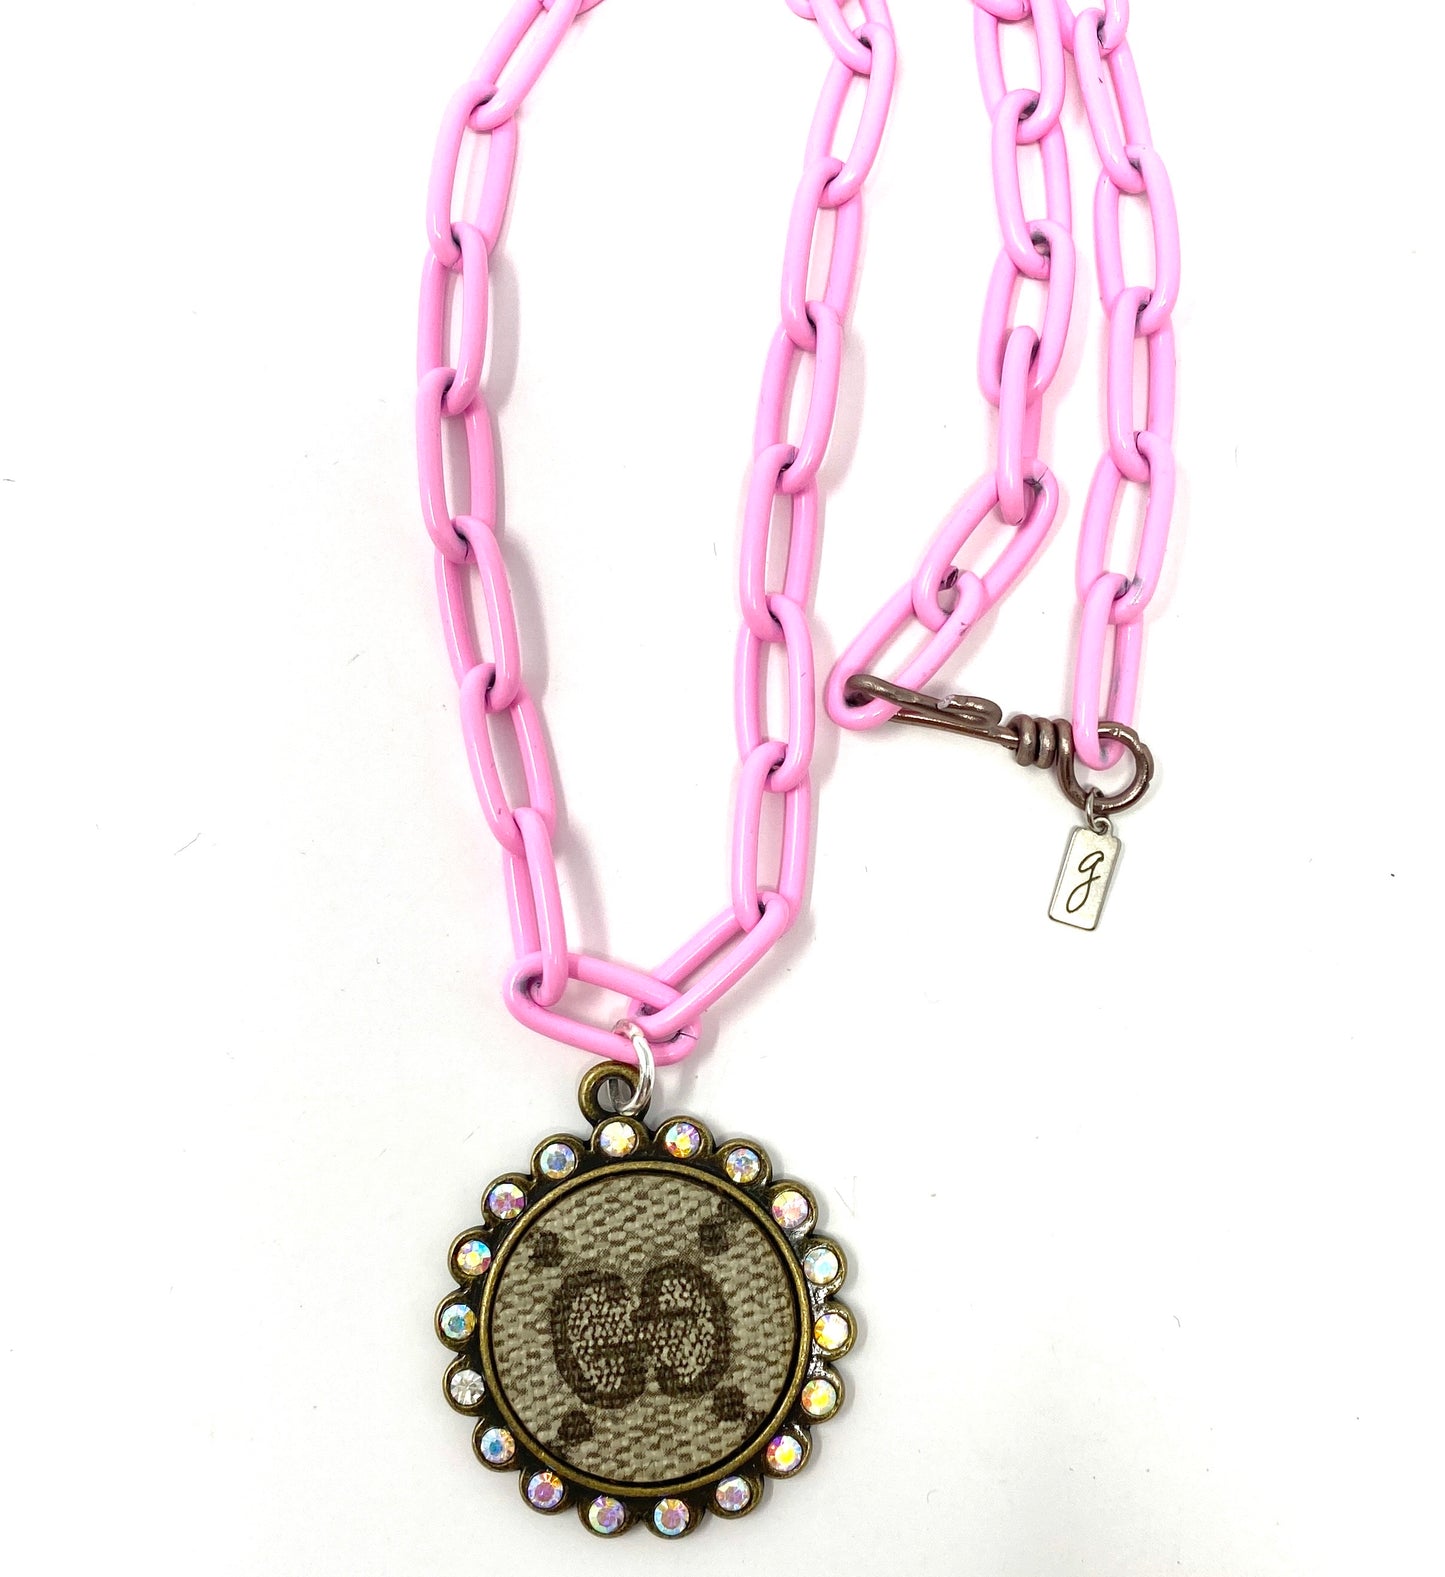 Bubblegum Pink Enamel Chain Necklace With Signature "GG" Pendant